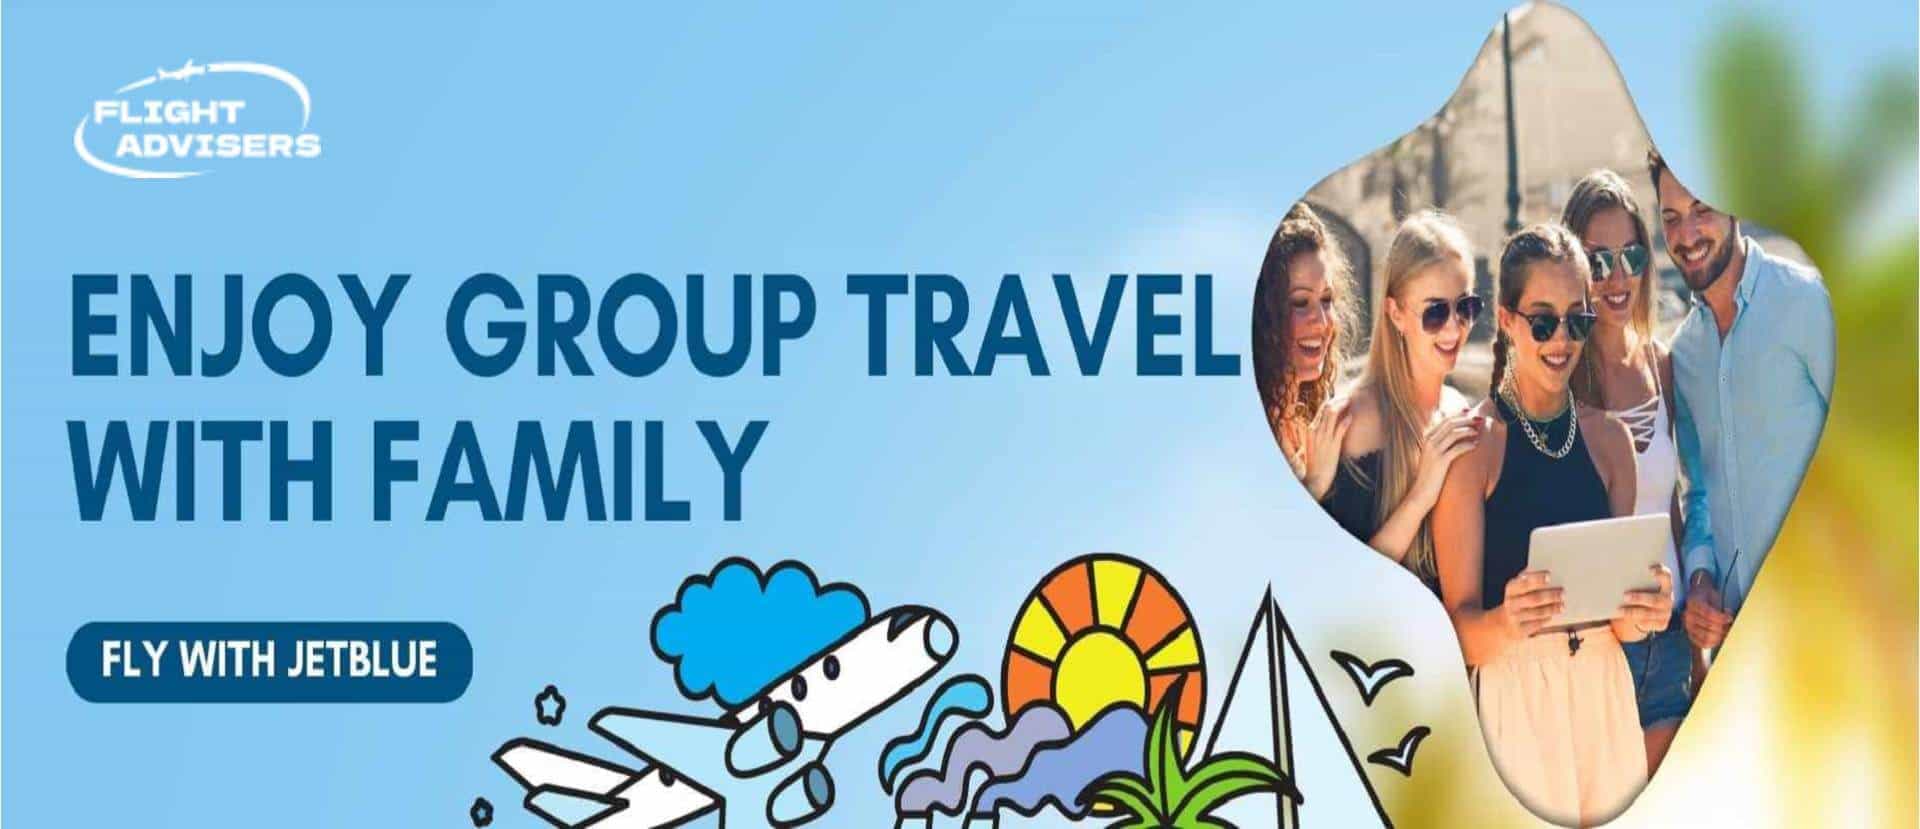 jetblue-group-travel